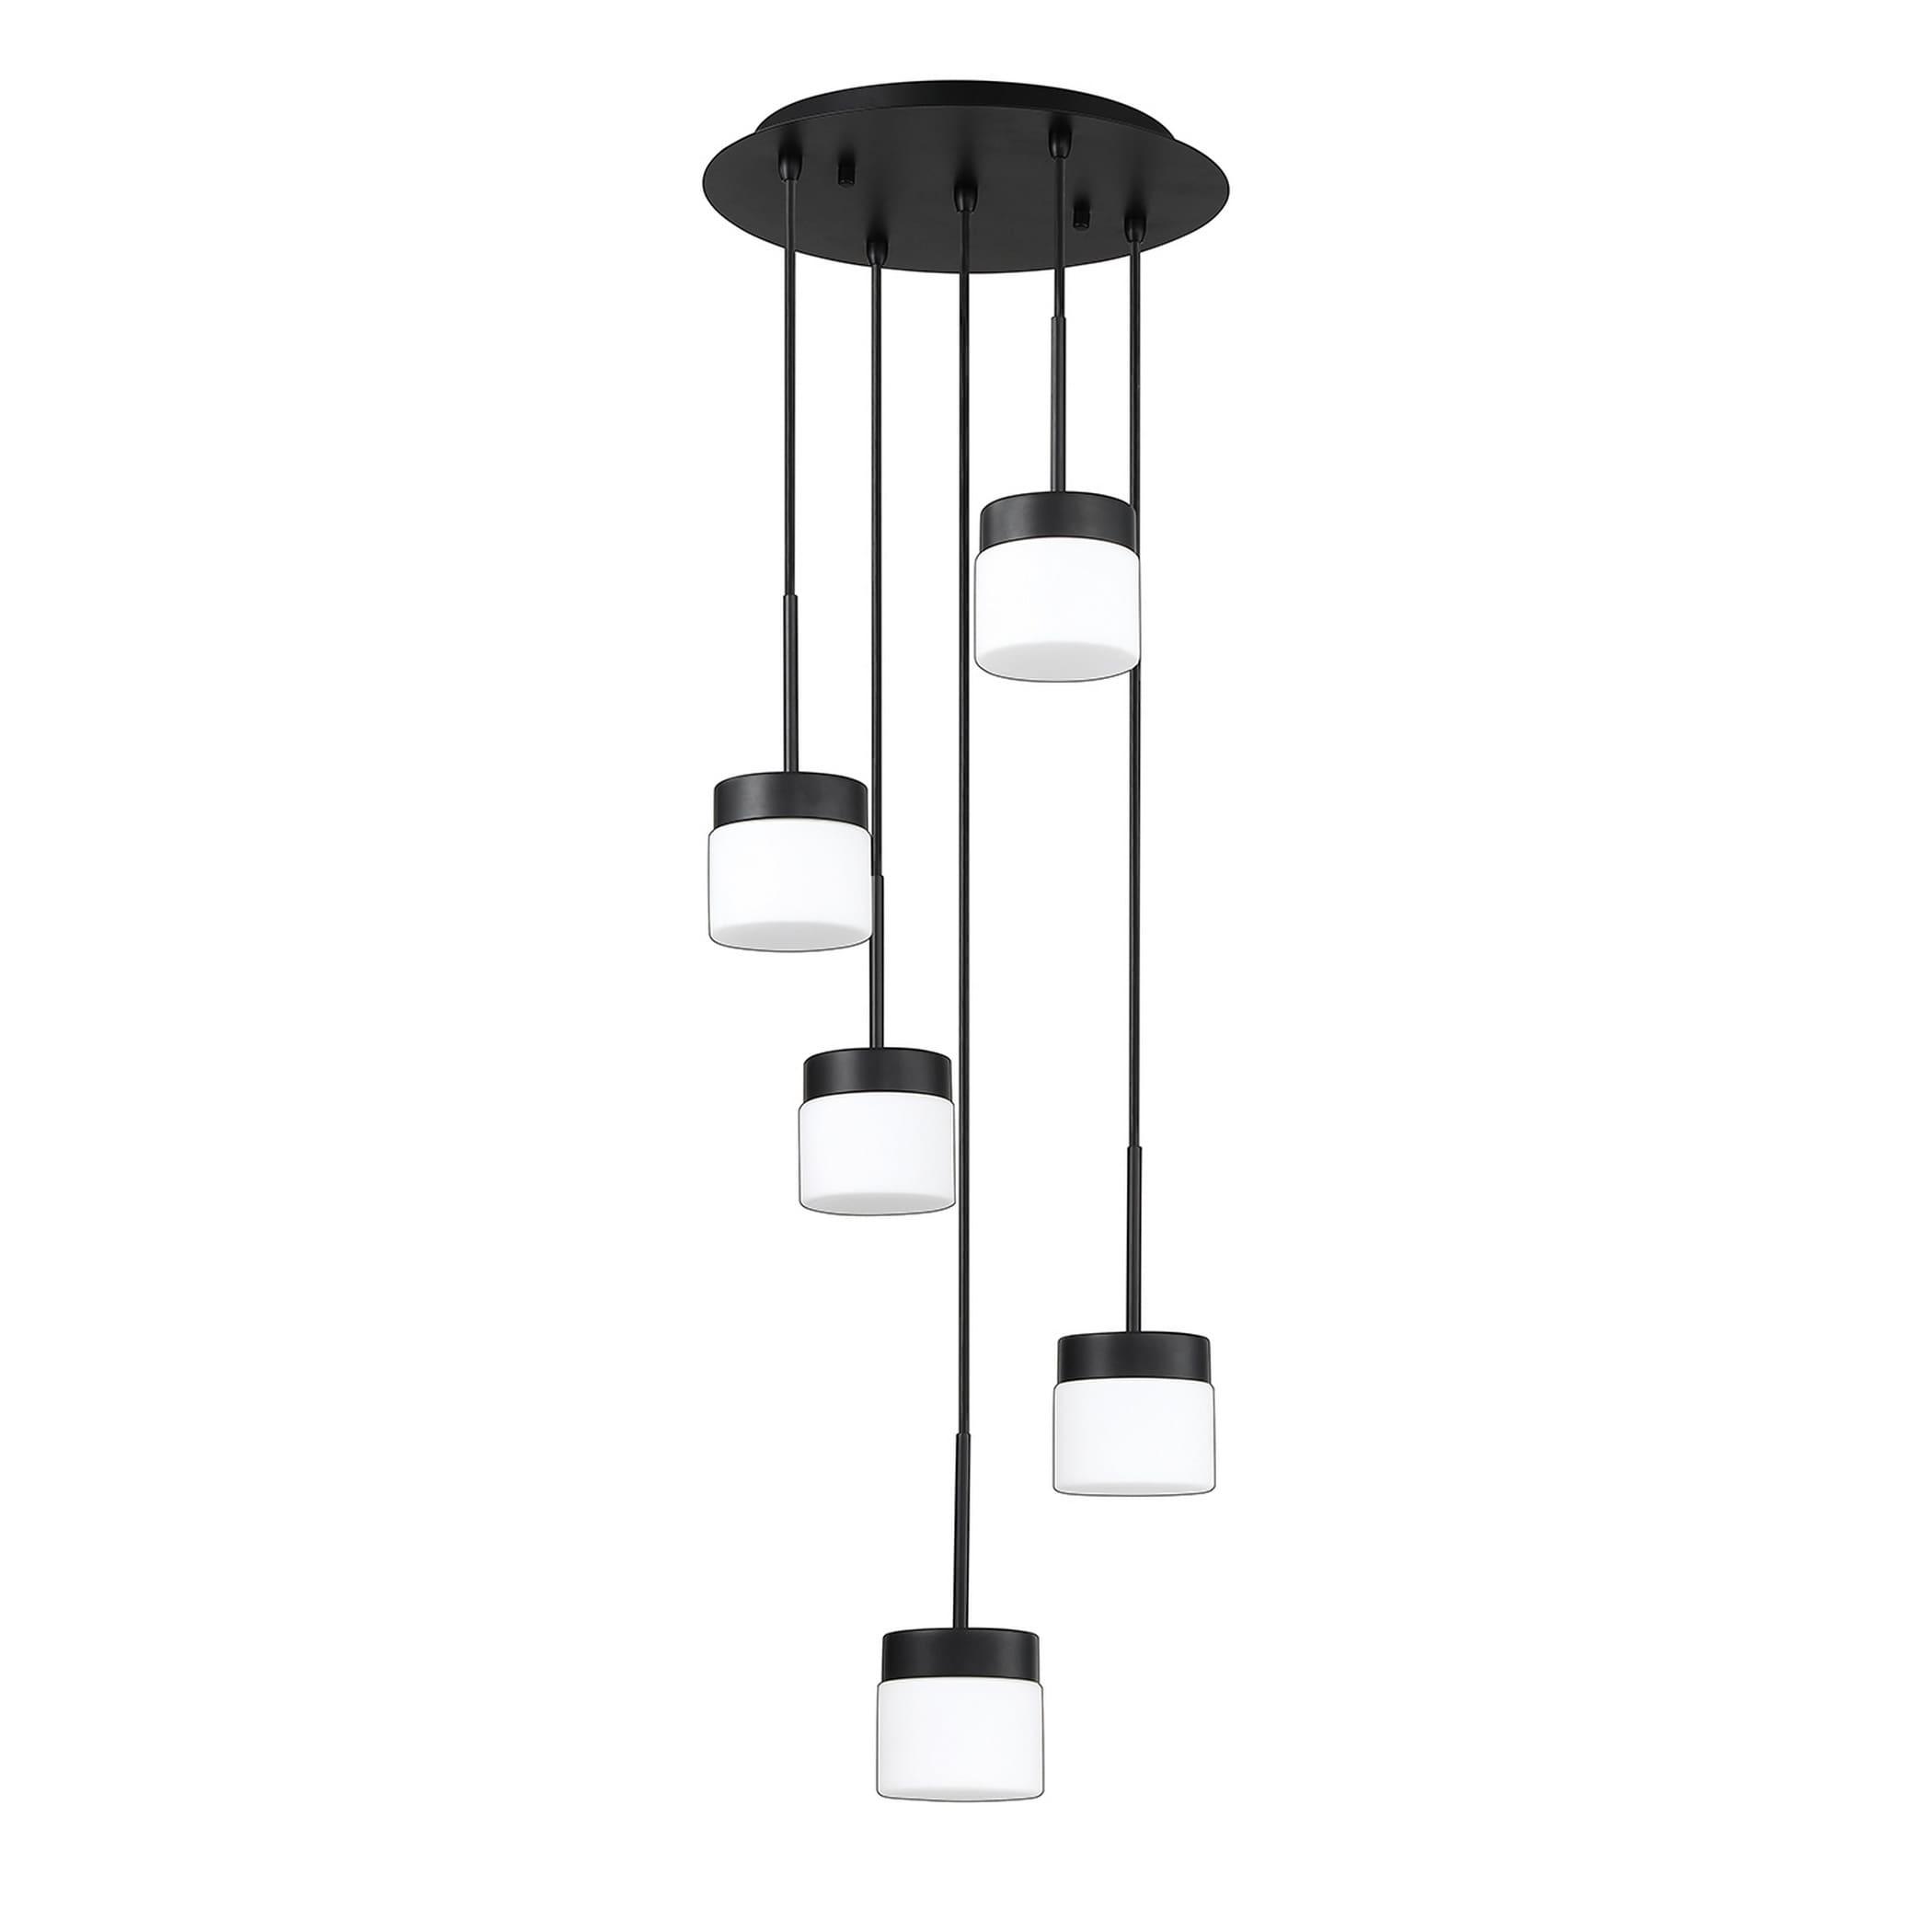 Nuon 5-Light Adjustable Black and White Glass Drum Pendant